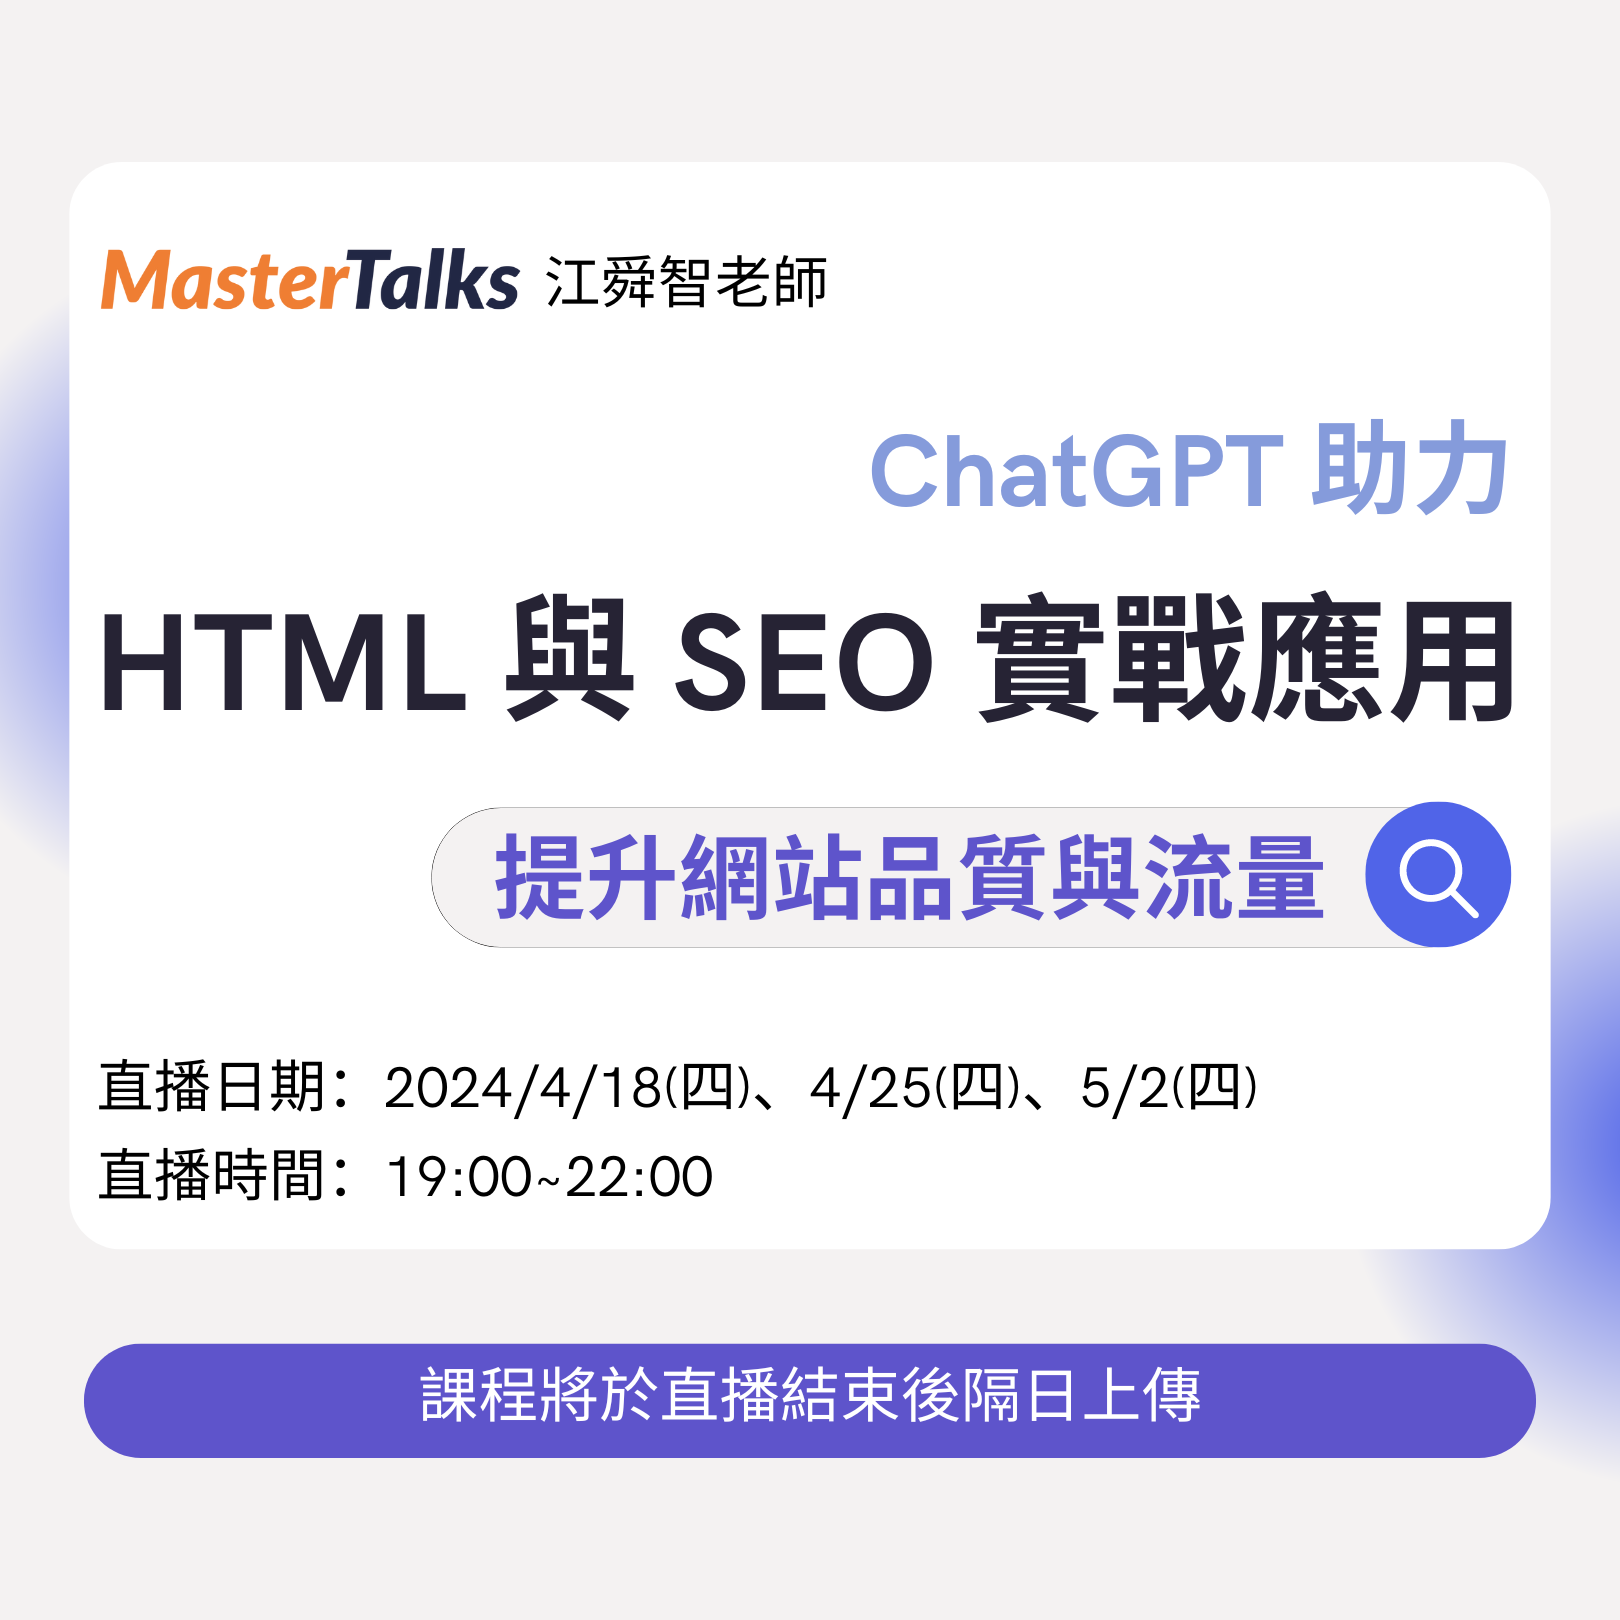 HTML 與 SEO 實戰應用— 並以 ChatGPT 助力提升網站品質與流量